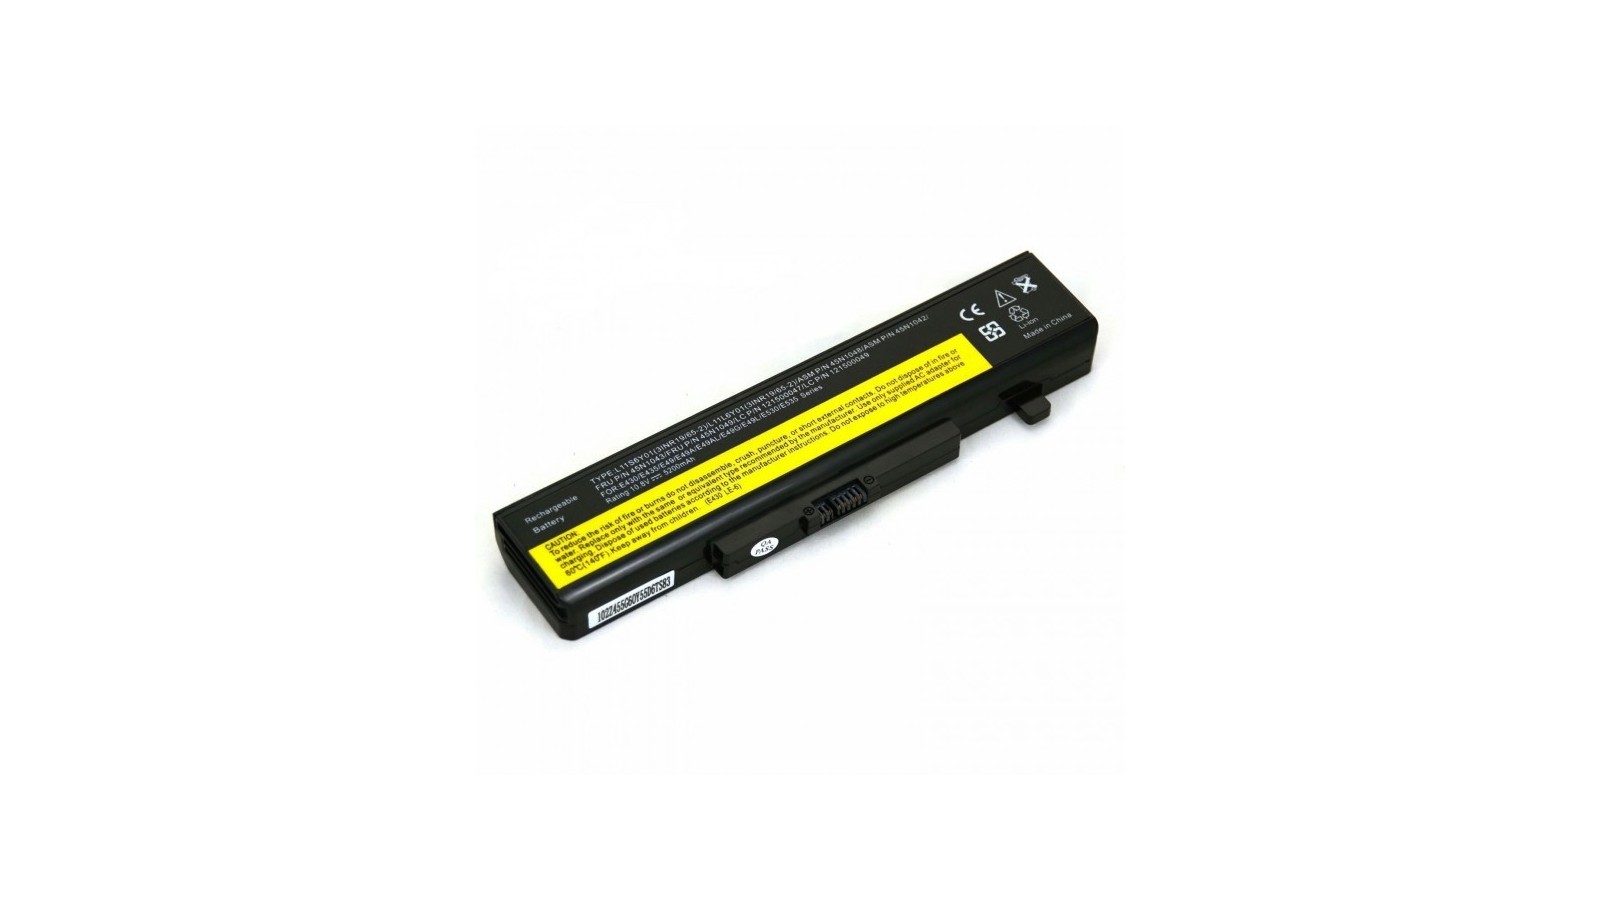 Batteria 5200mAh per Lenovo IdeaPad B480 B485 B490 B580 B585 B590